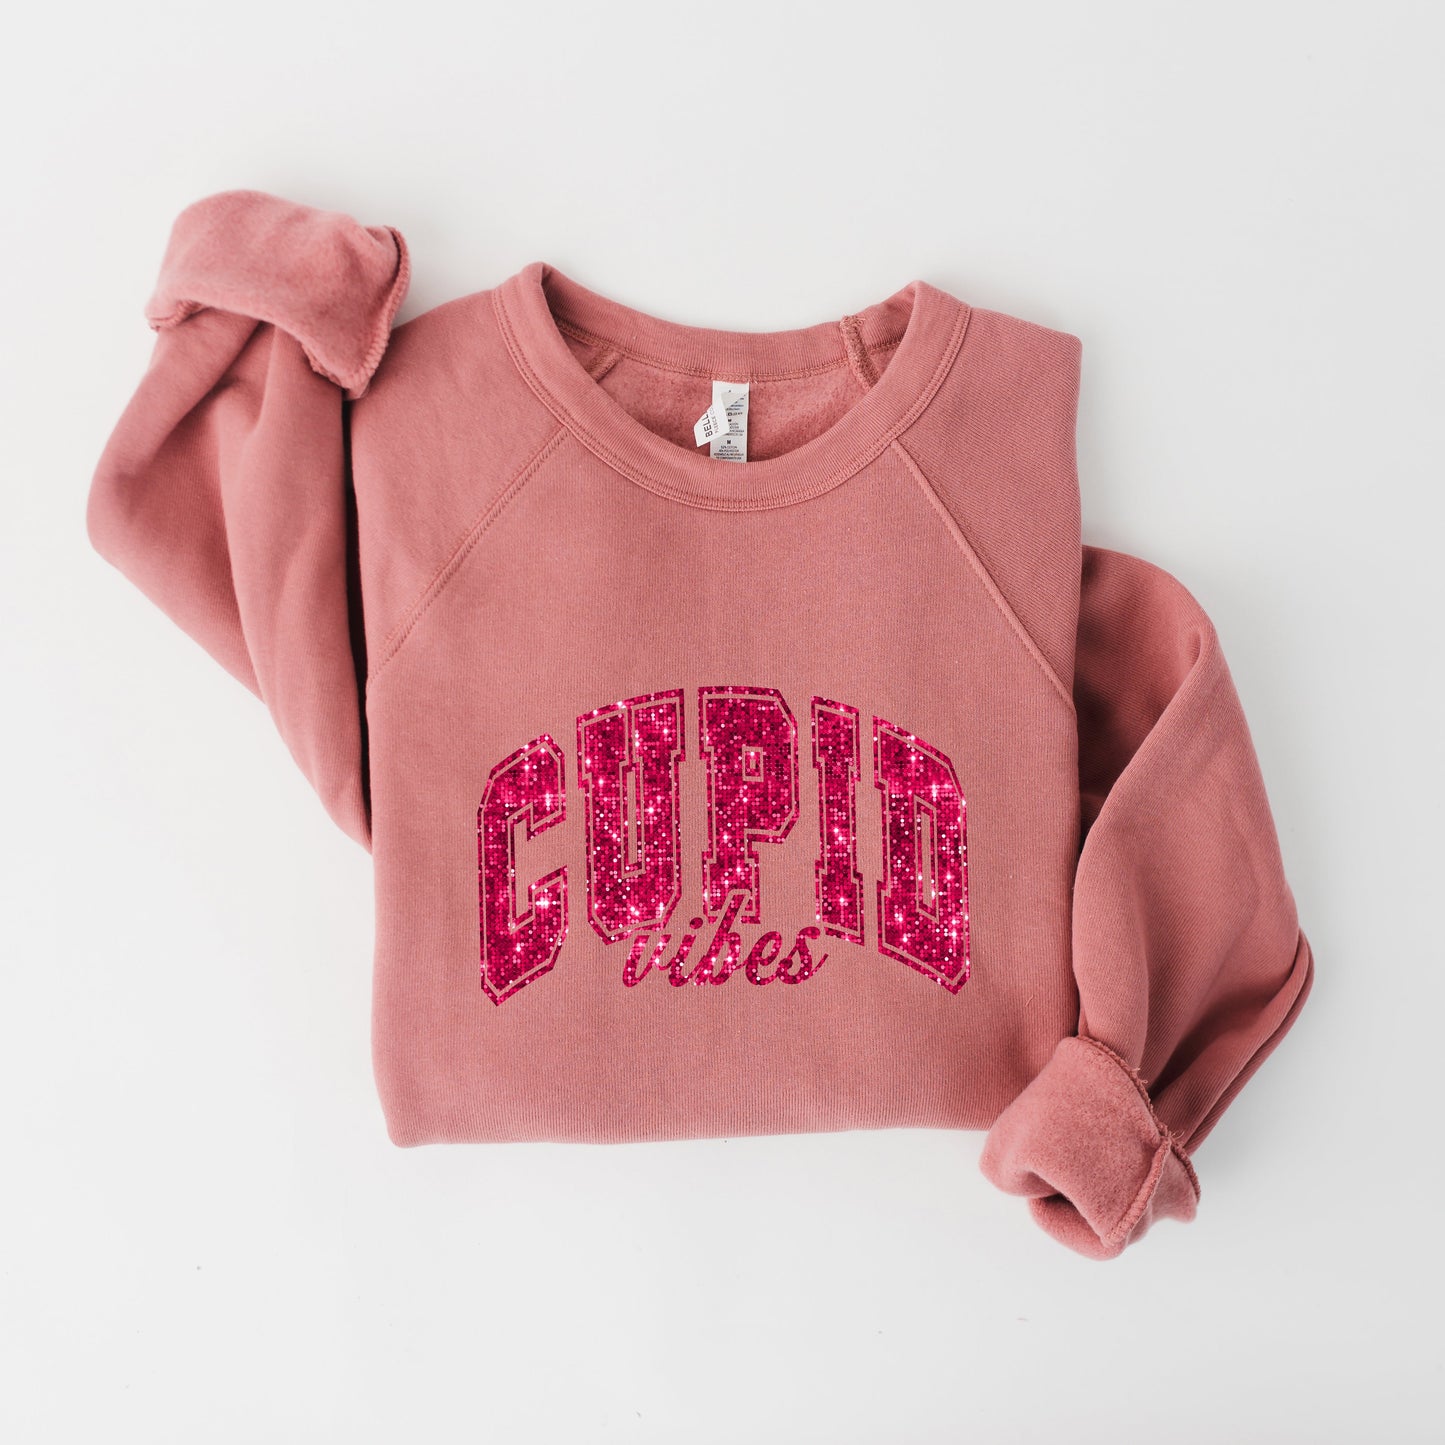 Cupid Vibes | Bella Canvas Sweatshirt